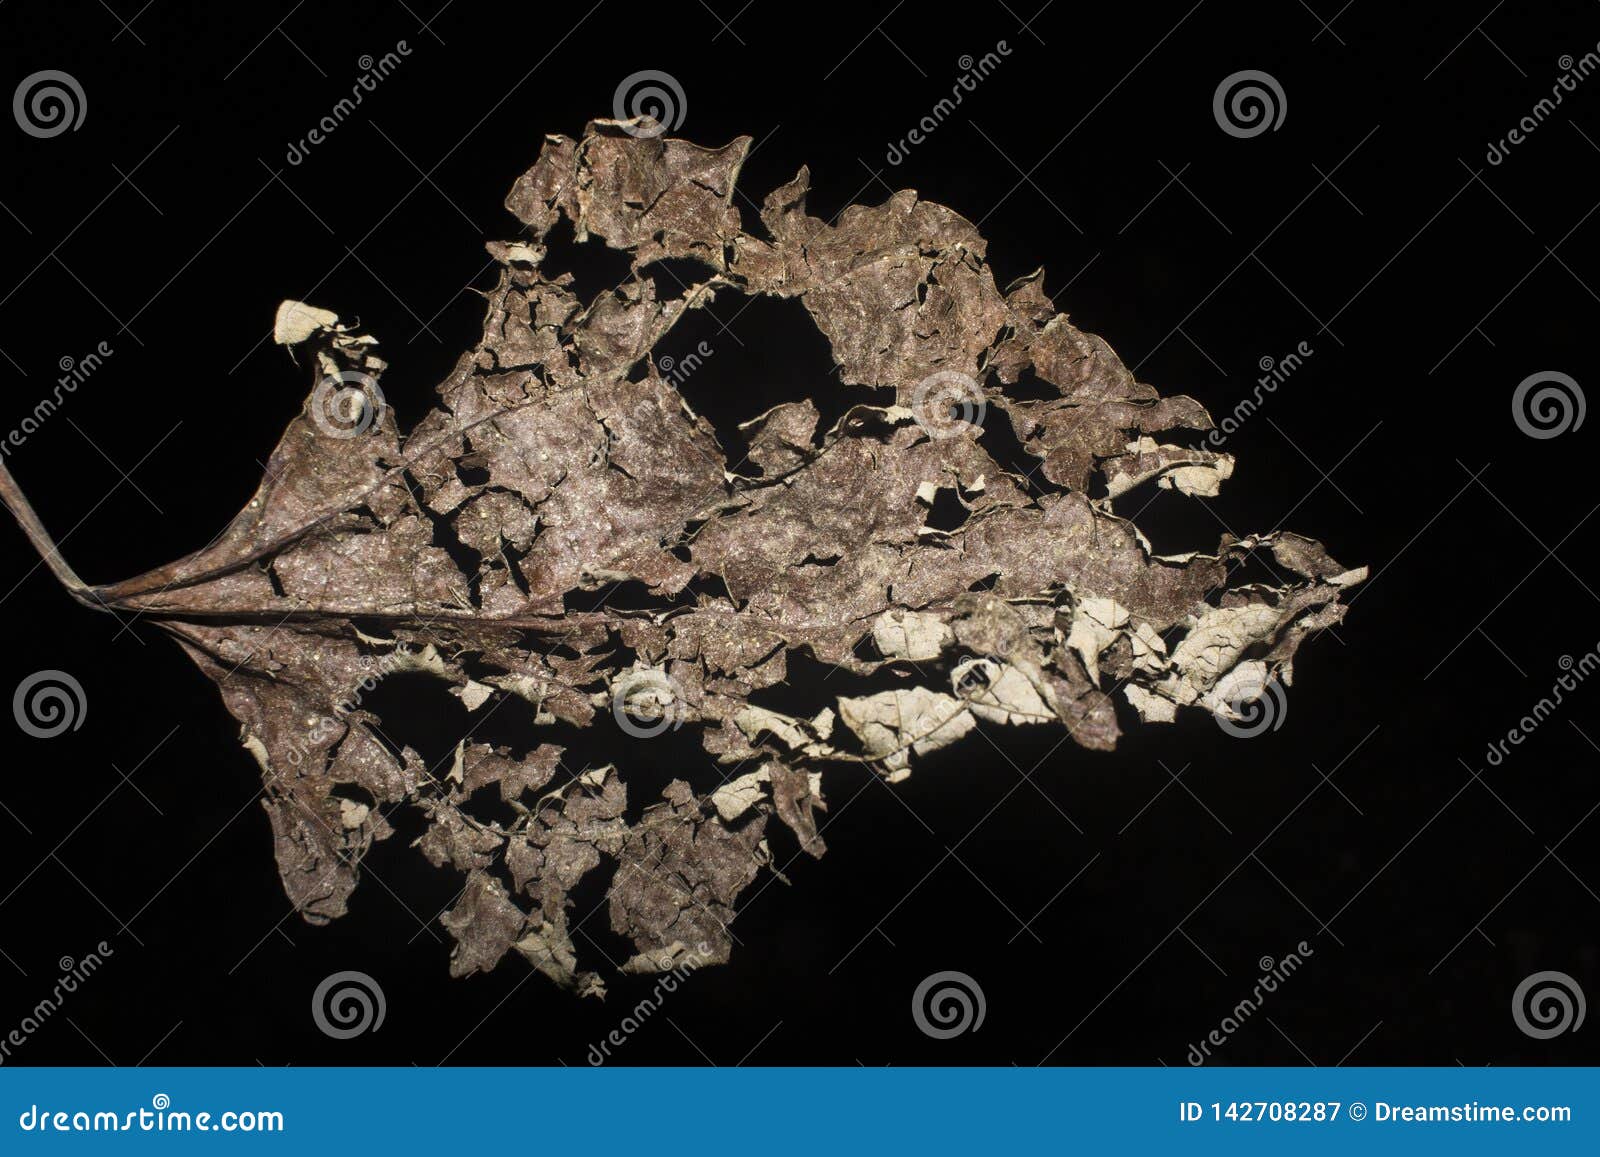 dried leaf closeup -stock image